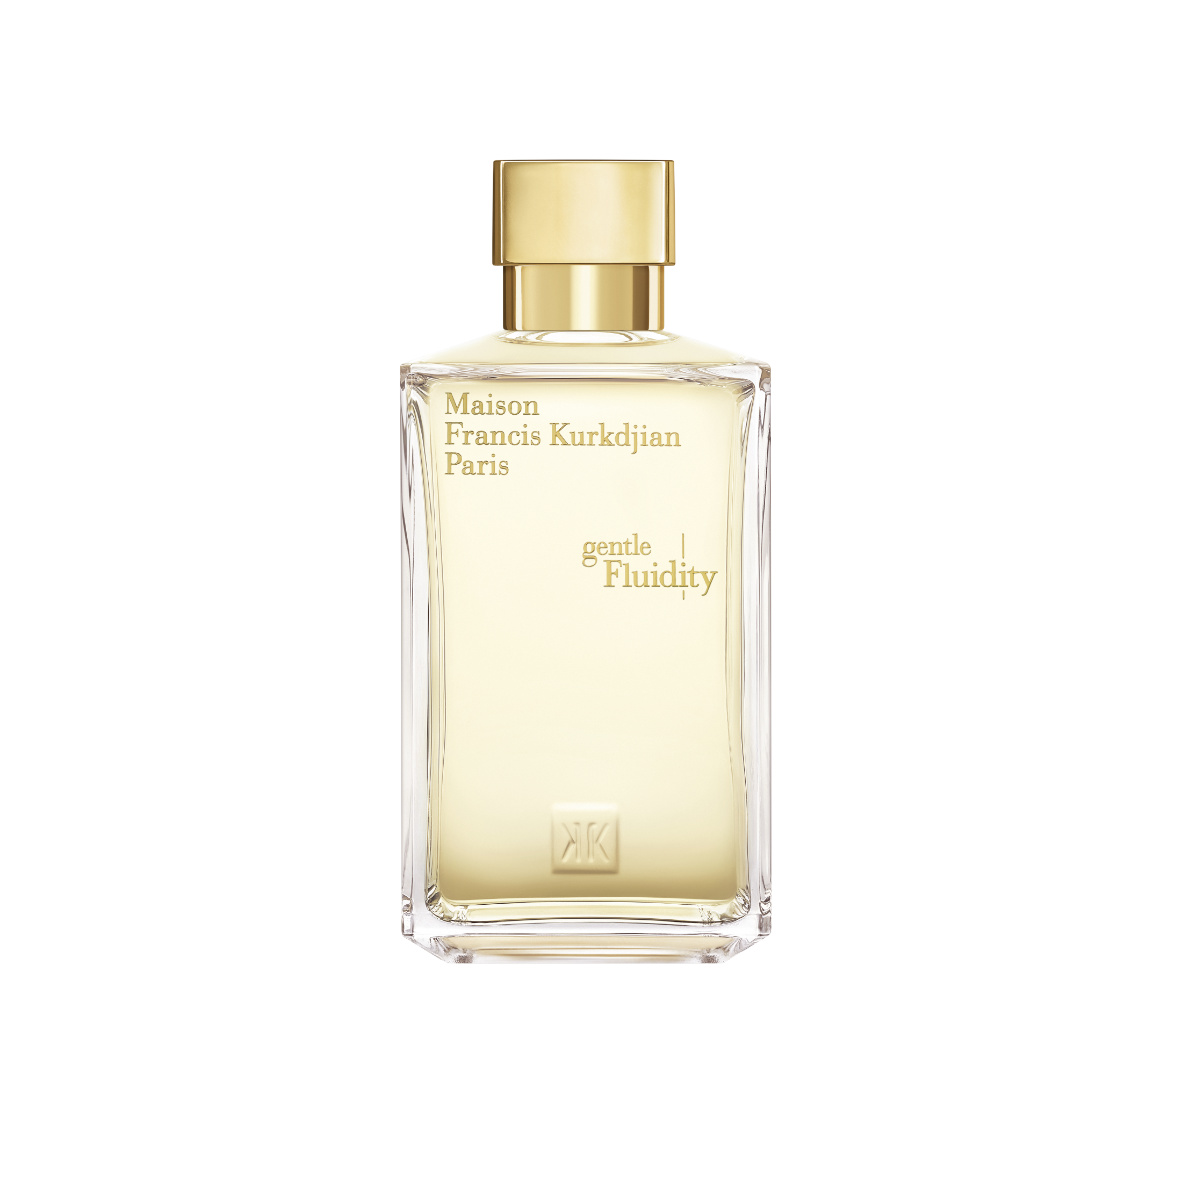 Maison Francis Kurkdjian Presents Gentle Fluidity - Same Notes, Two Identities